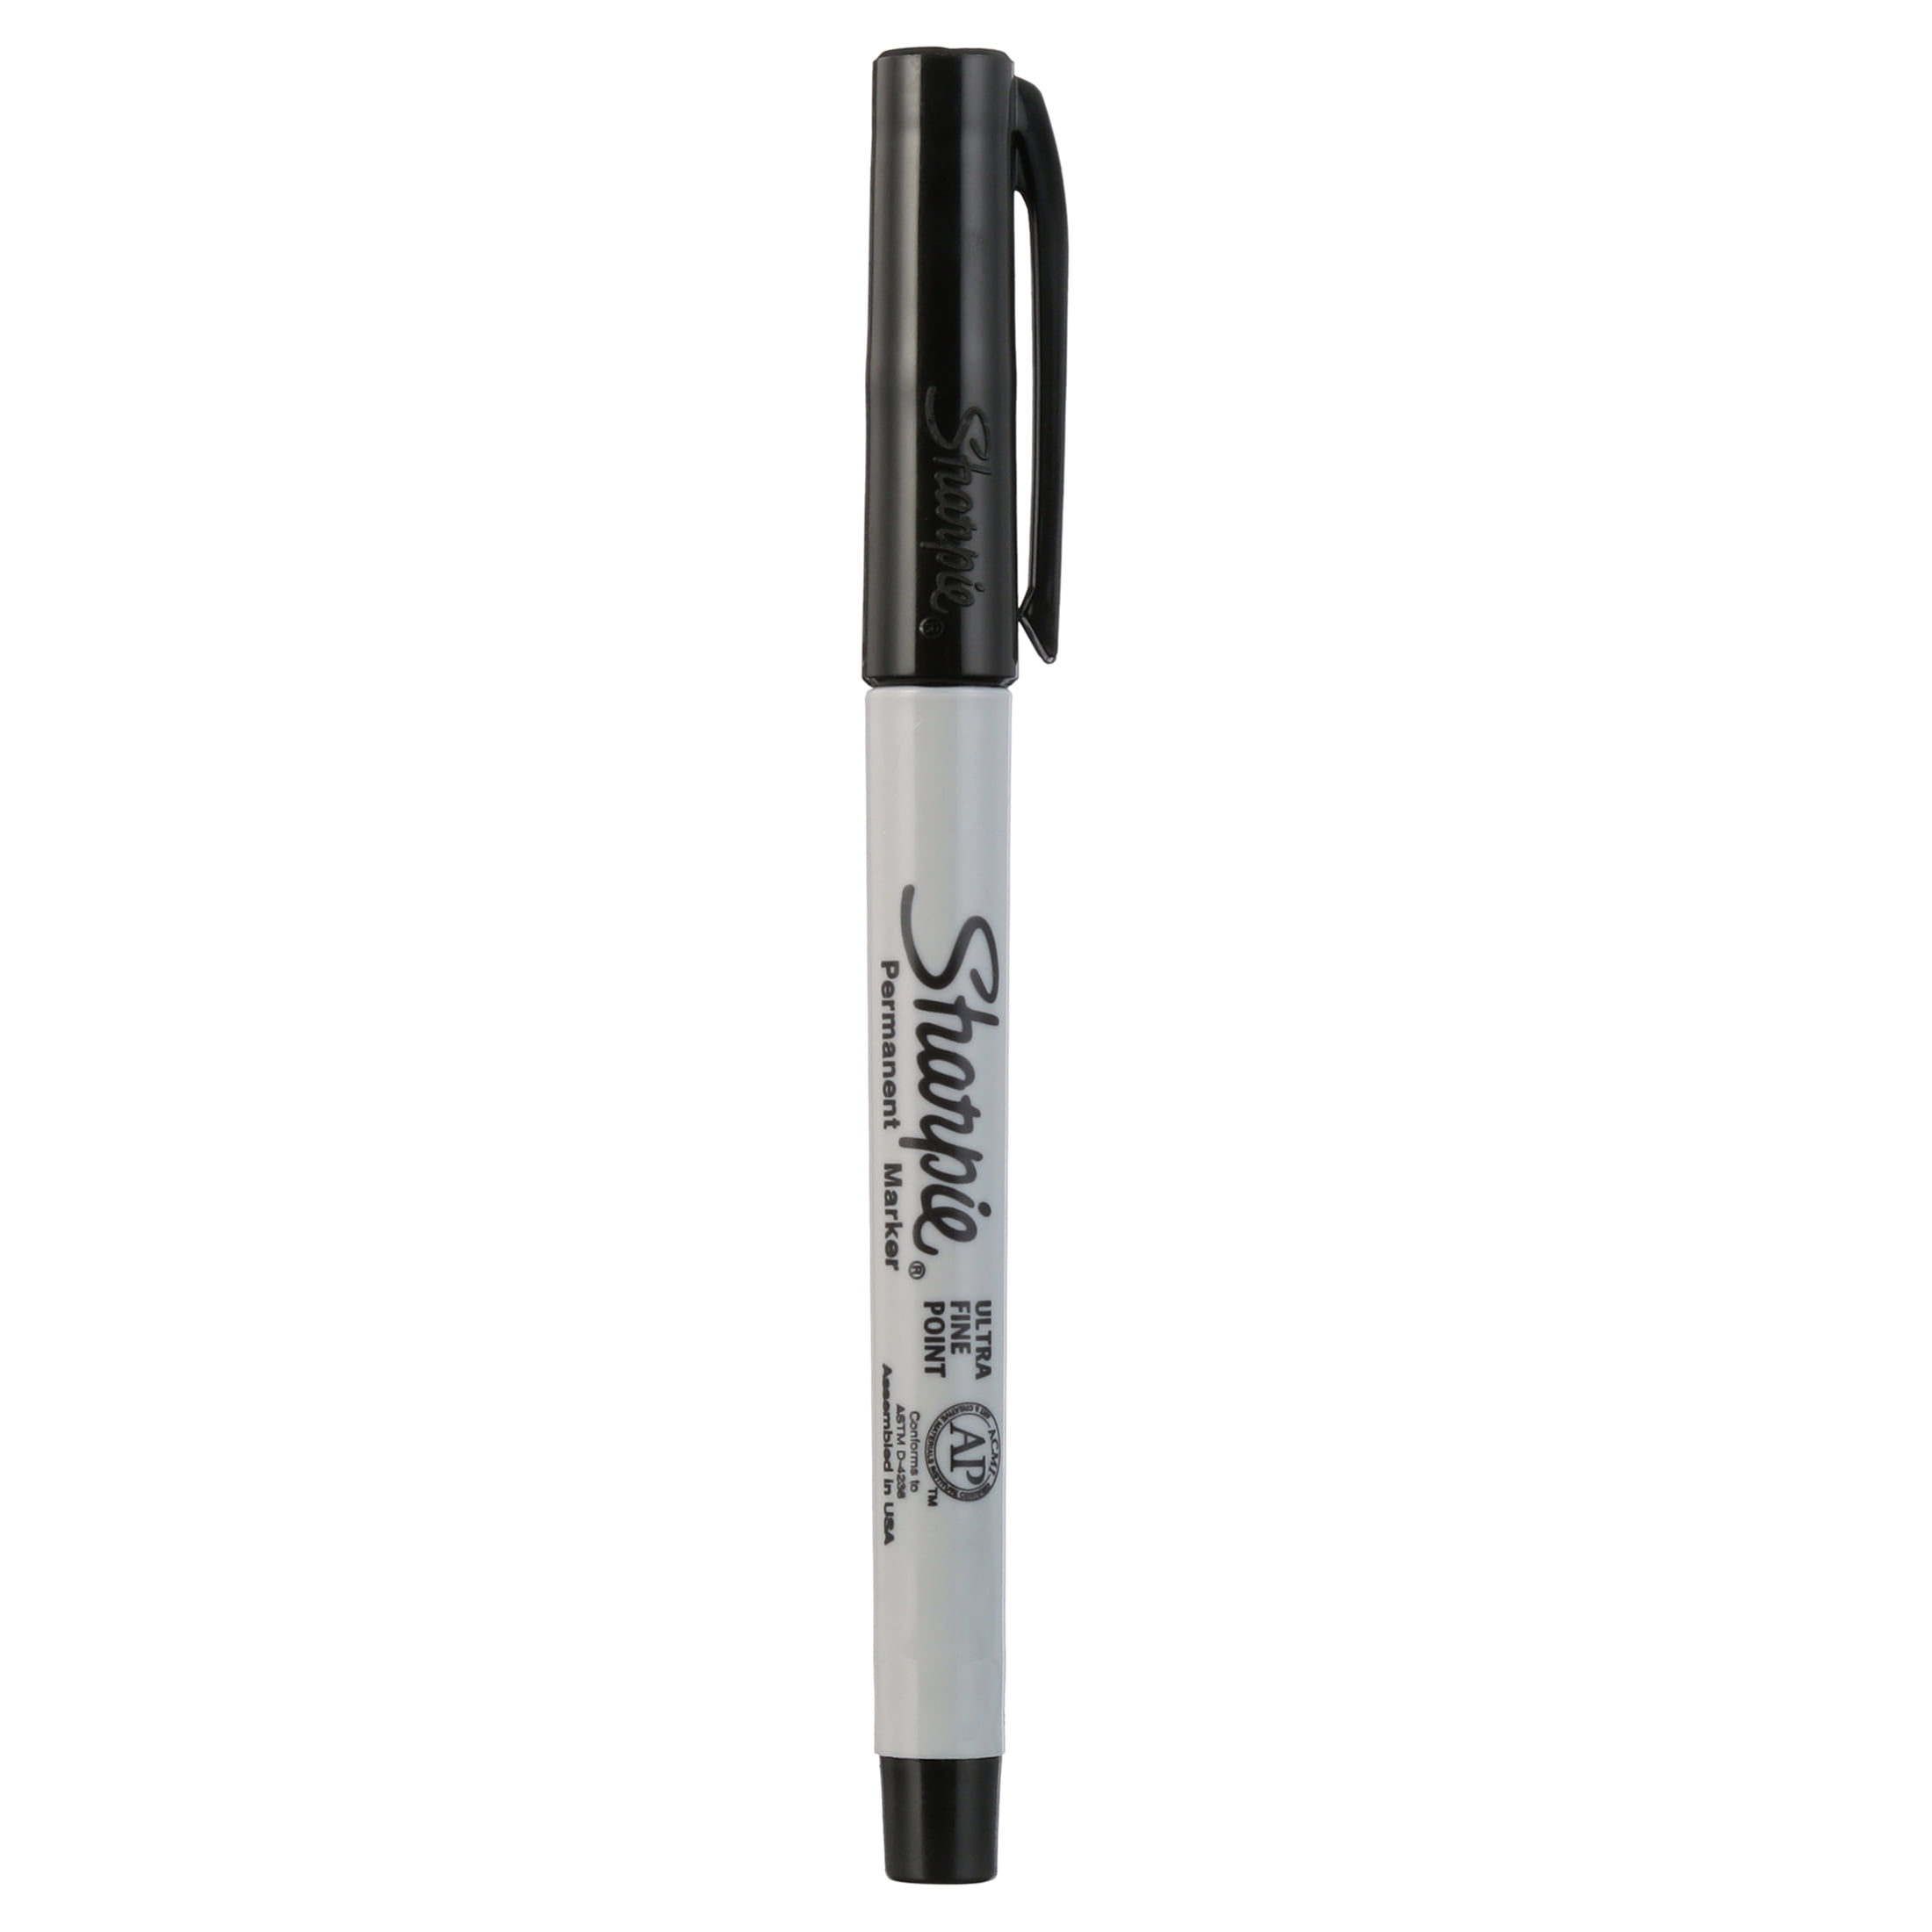 Sharpie Permanent Markers Ultra Fine Tip Black (37121) 593980